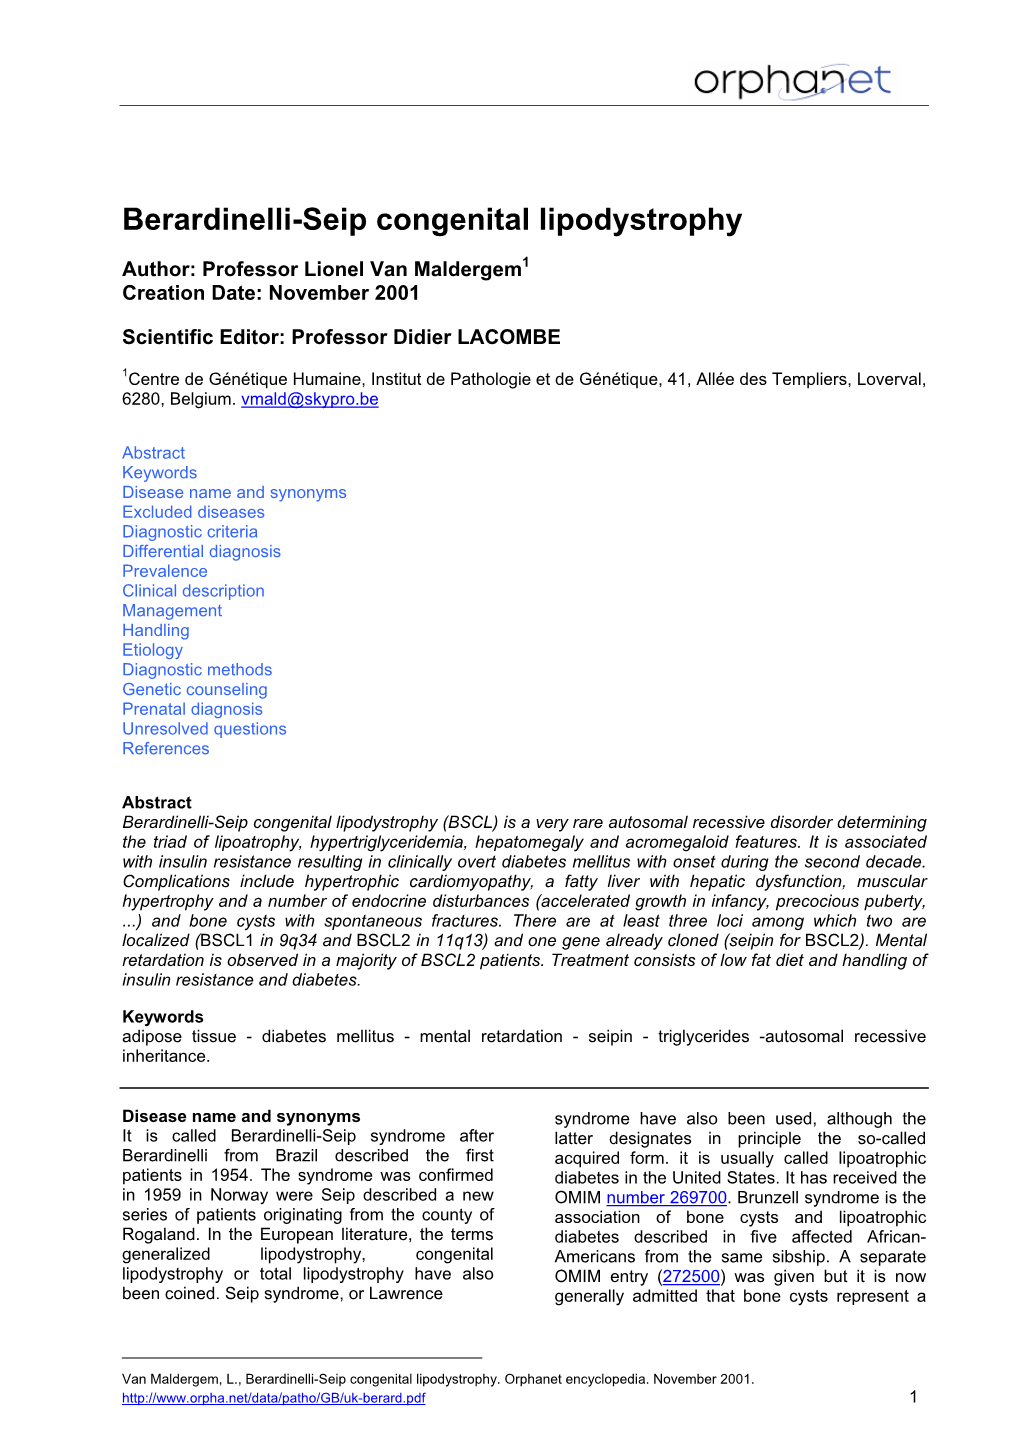 Berardinelli-Seip Congenital Lipodystrophy